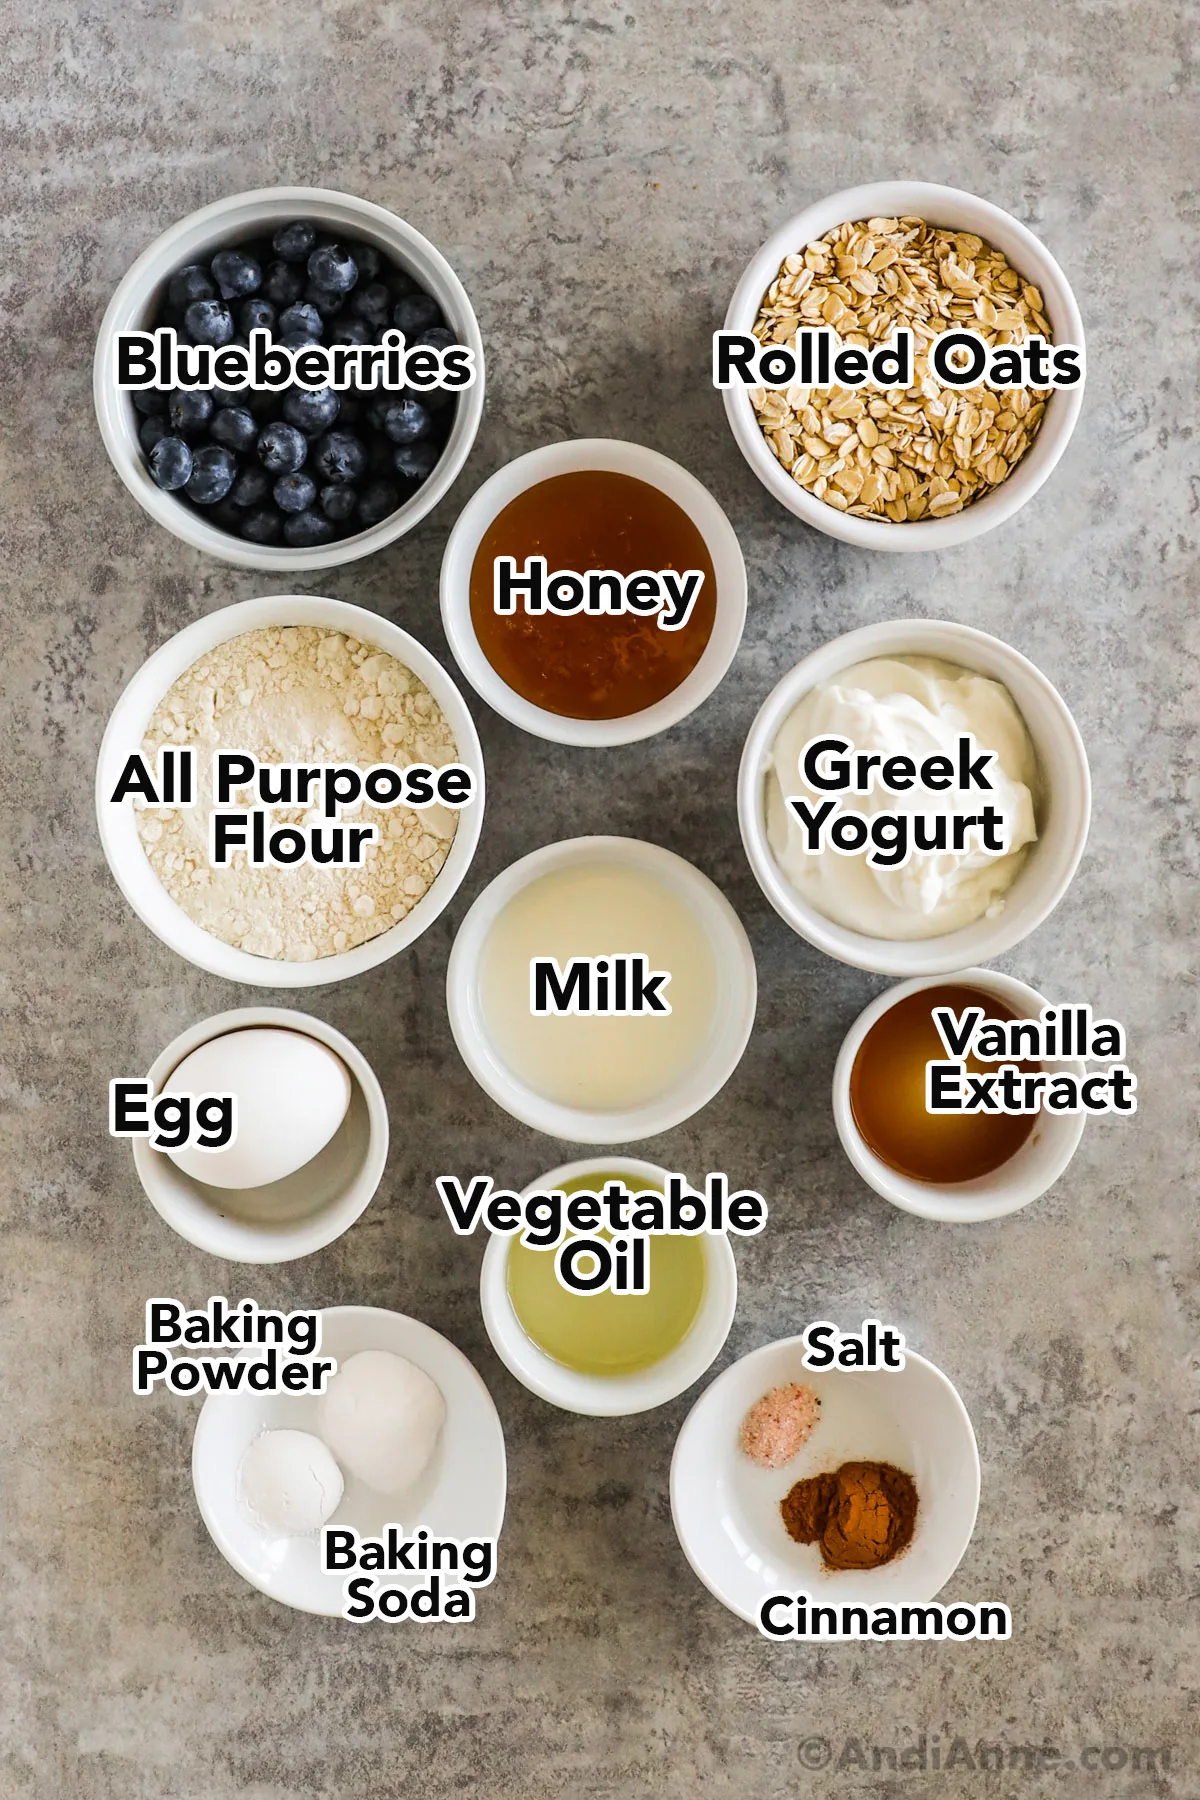 Recipe ingredients on the counter including bowls of blueberries, rolled oats, honey, flour, greek yogurt, milk, vanilla, vegetable oil, salt and baking powder.